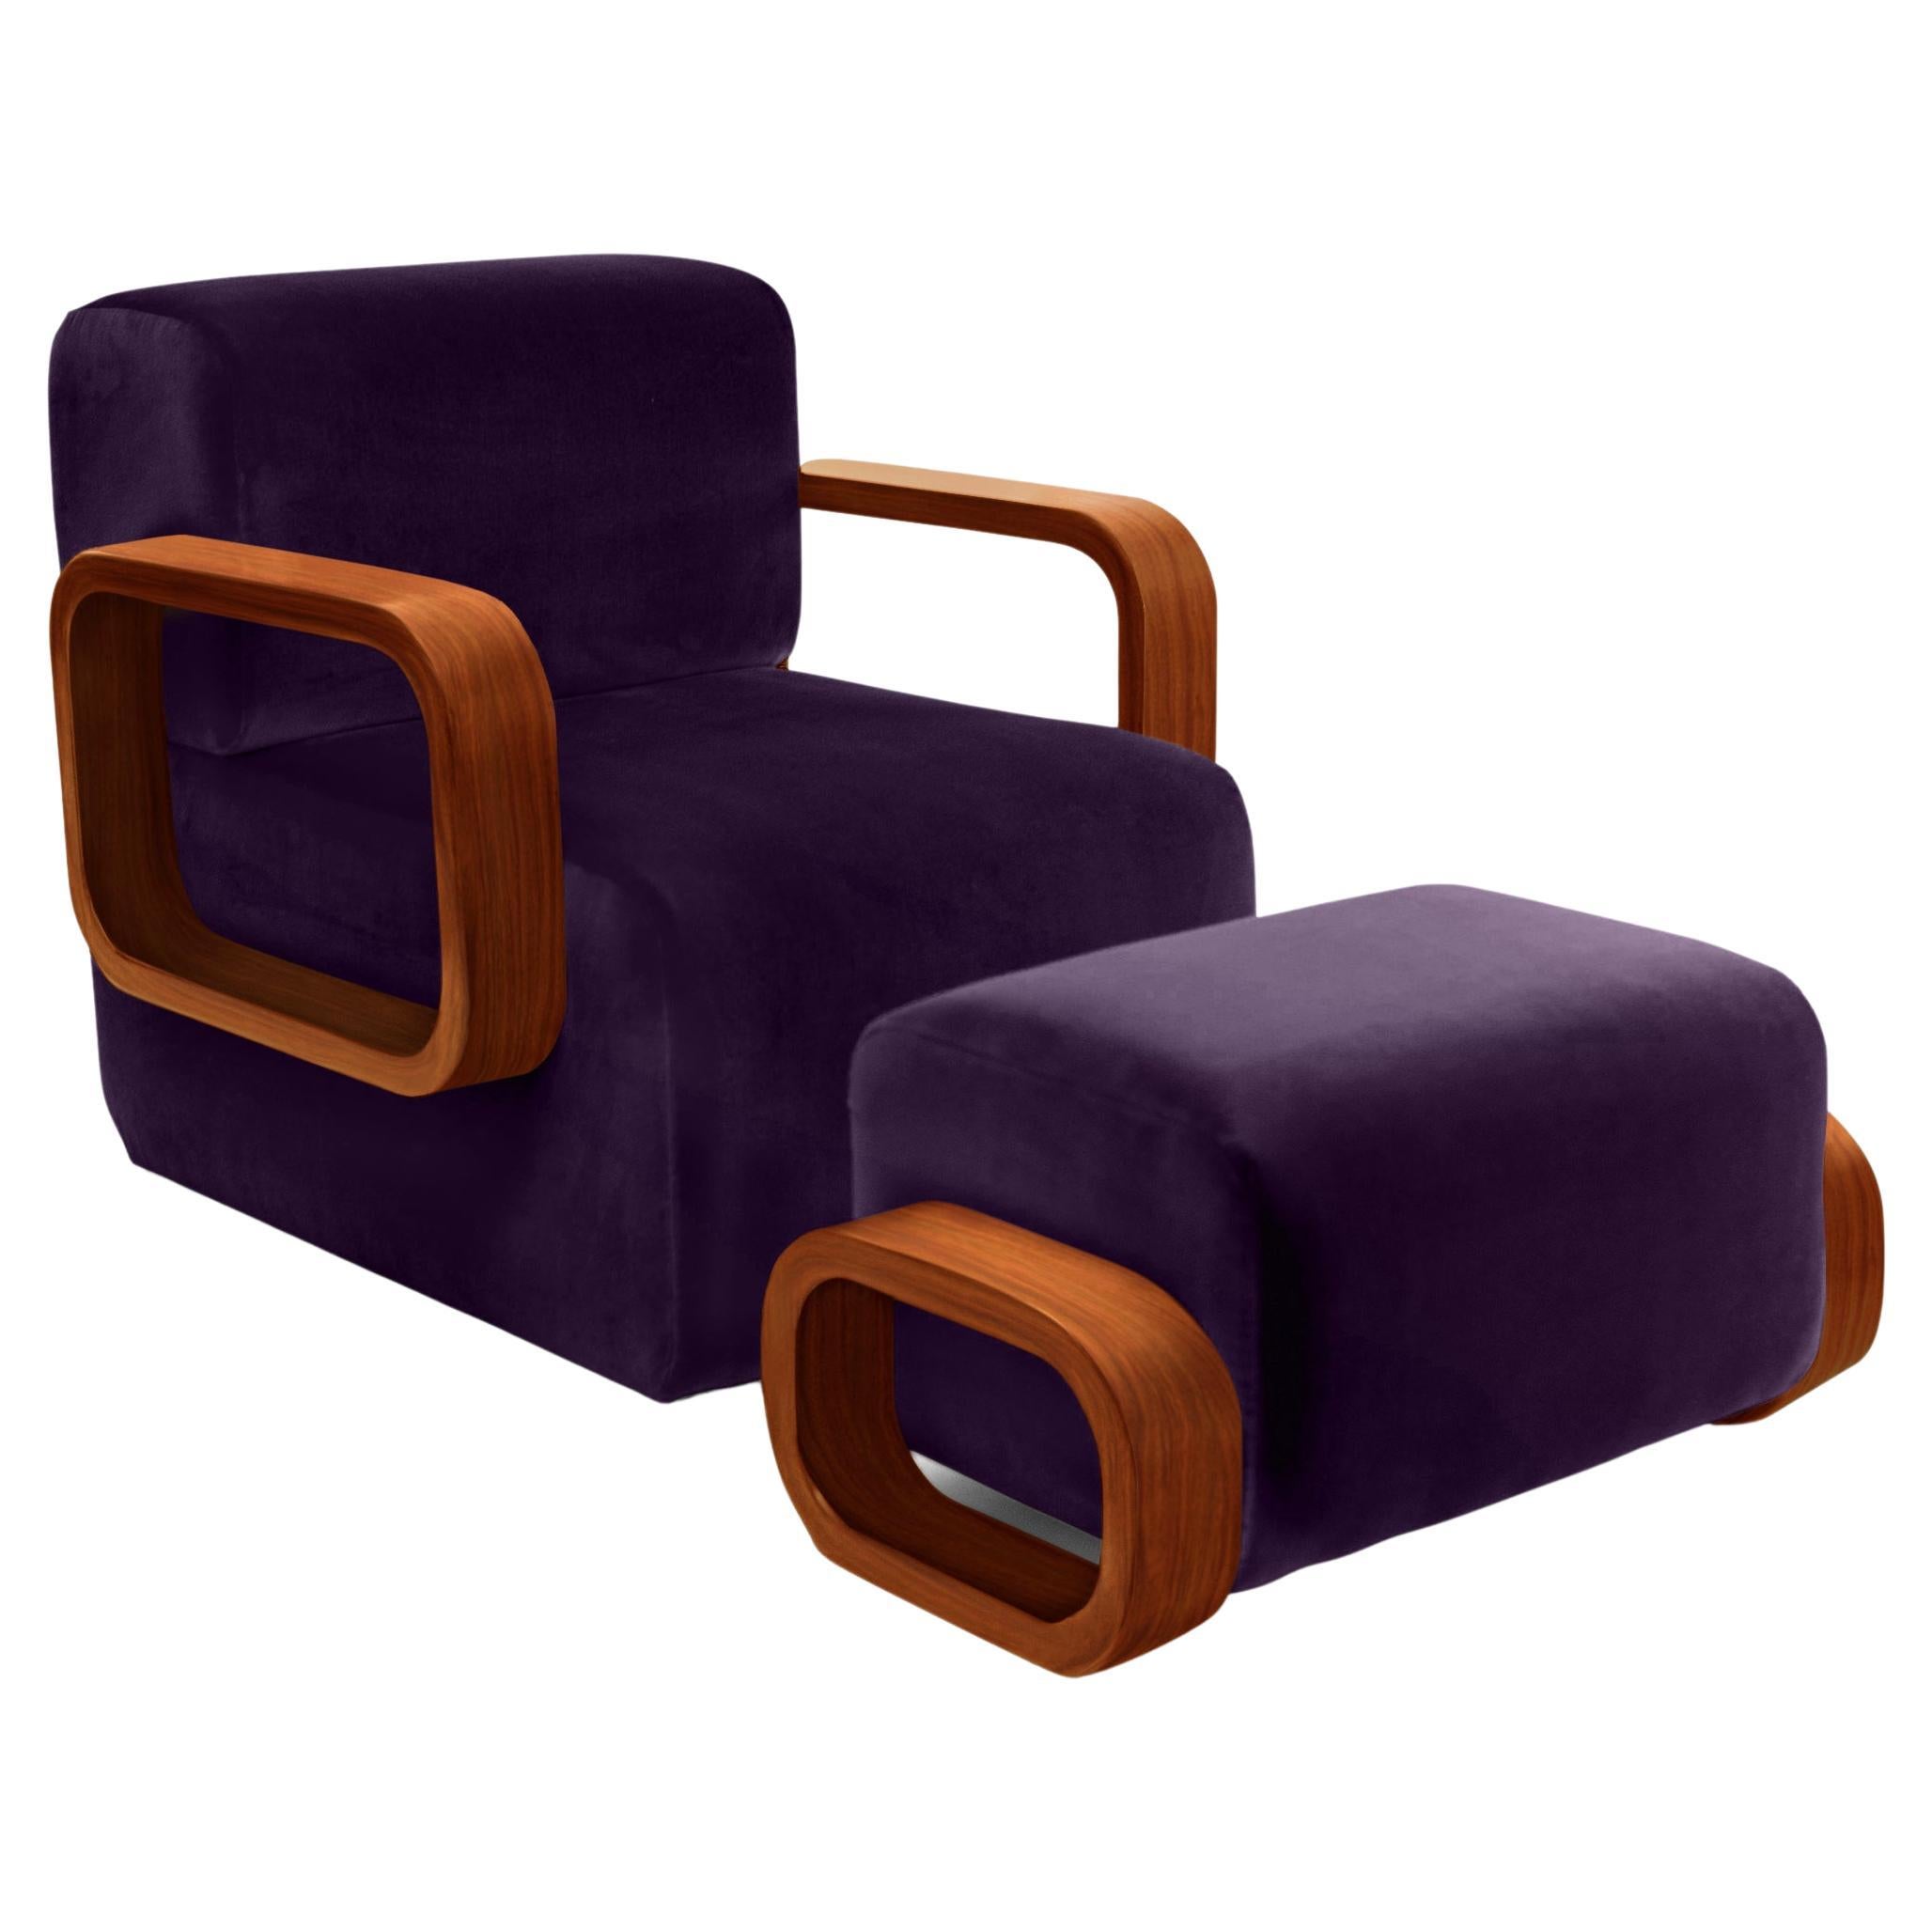 Cayenne Lounge Chair, Violet Velvet/High Gloss Varnish Brown Solid Oak